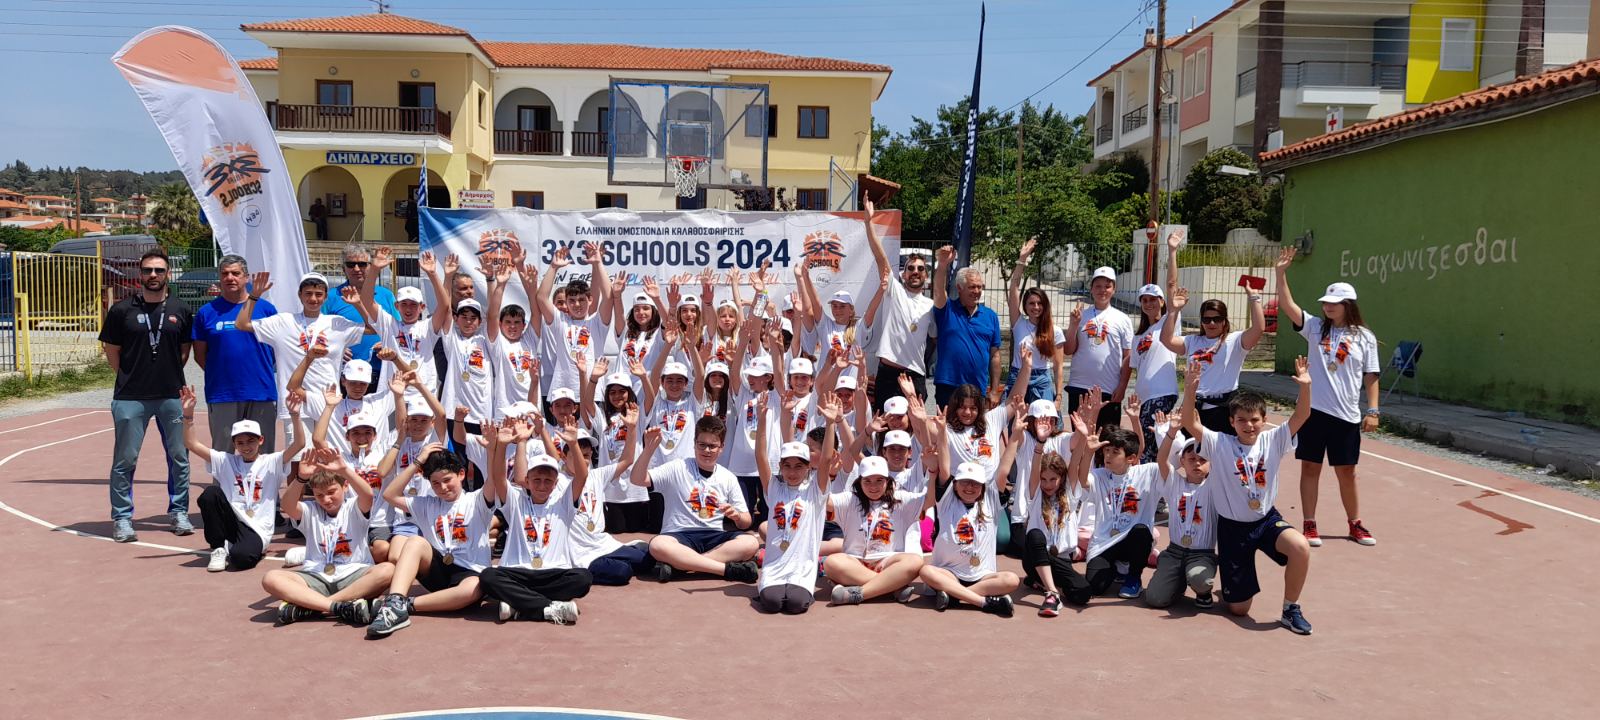 Eordaialive.com - Τα Νέα της Πτολεμαΐδας, Εορδαίας, Κοζάνης Πάνω από 3.500 μαθητές από 214 σχολεία σε όλη την Ελλάδα συμμετείχαν στο 3x3 Schools powered by ΔΕΗ